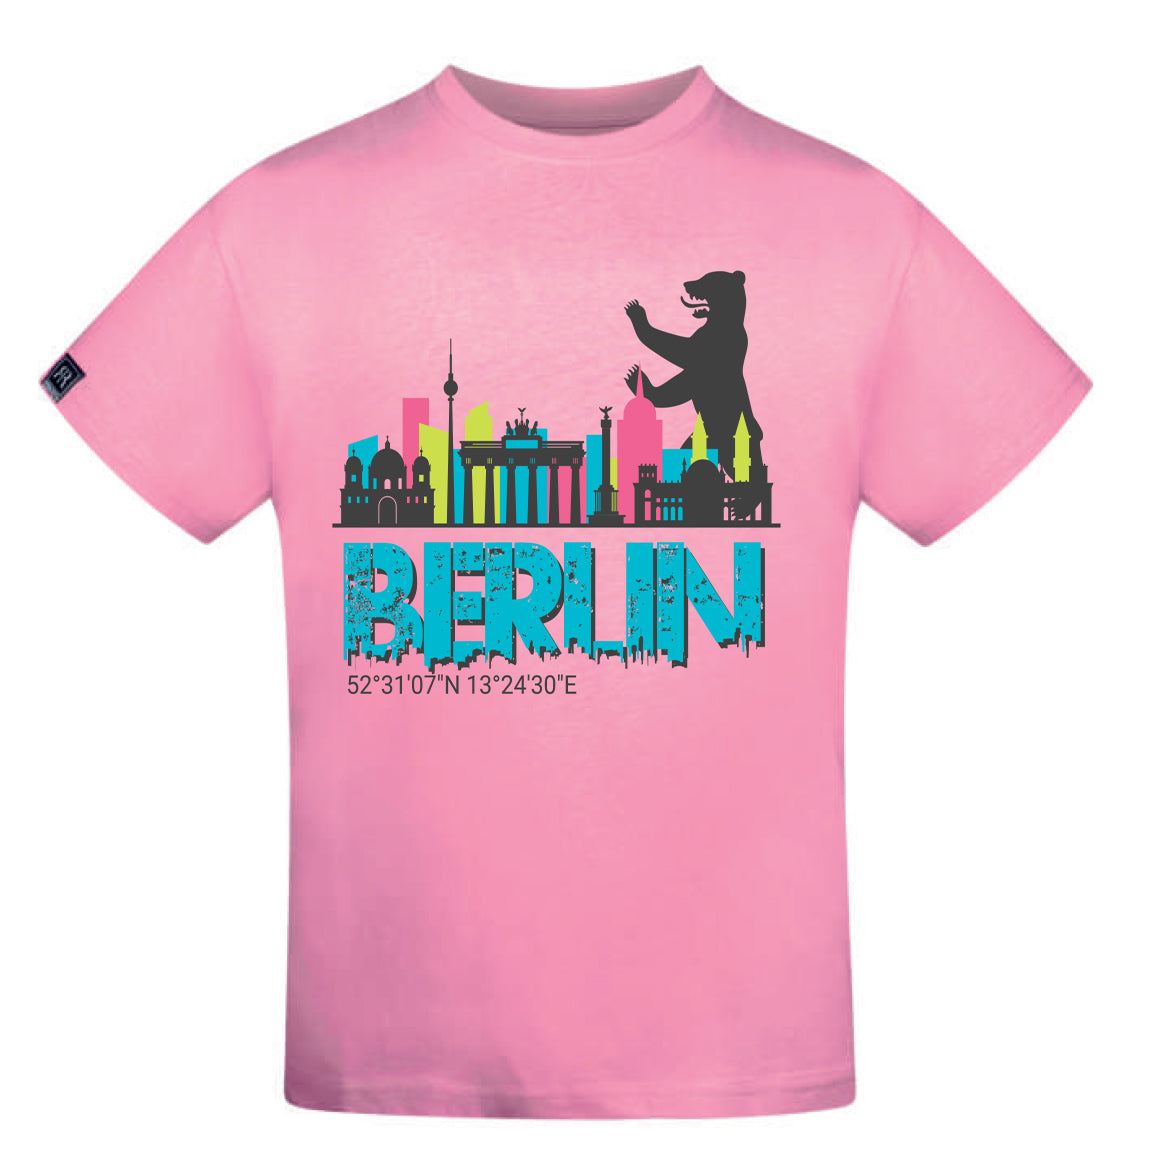 T-shirt children "Skyline Berlin pink" by Robin Ruth